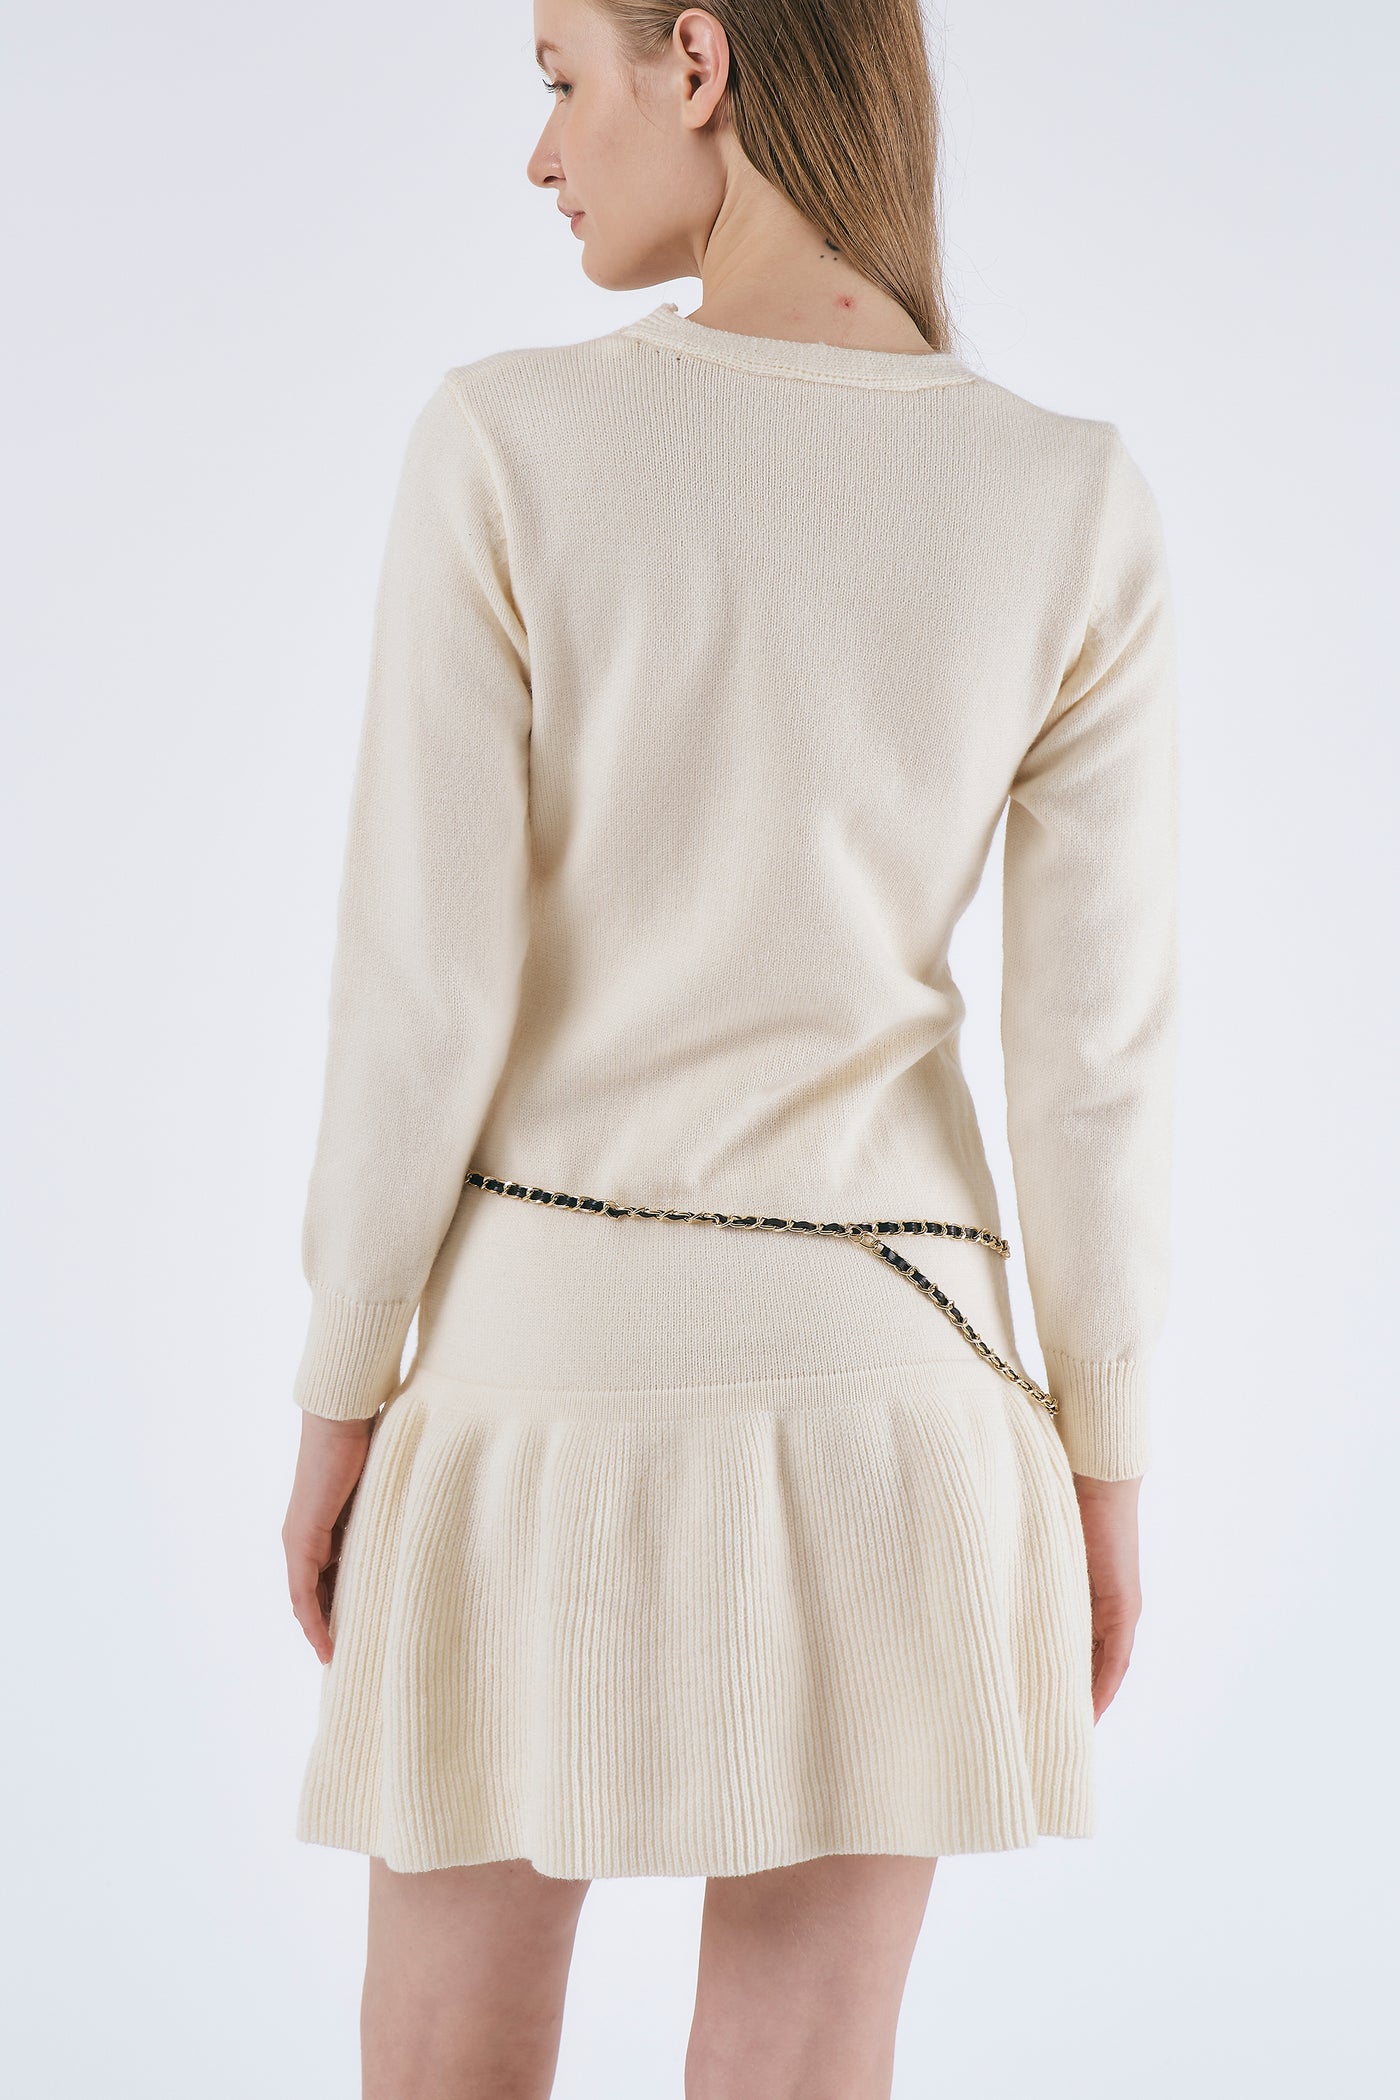 storets.com Carina Knitted Dress